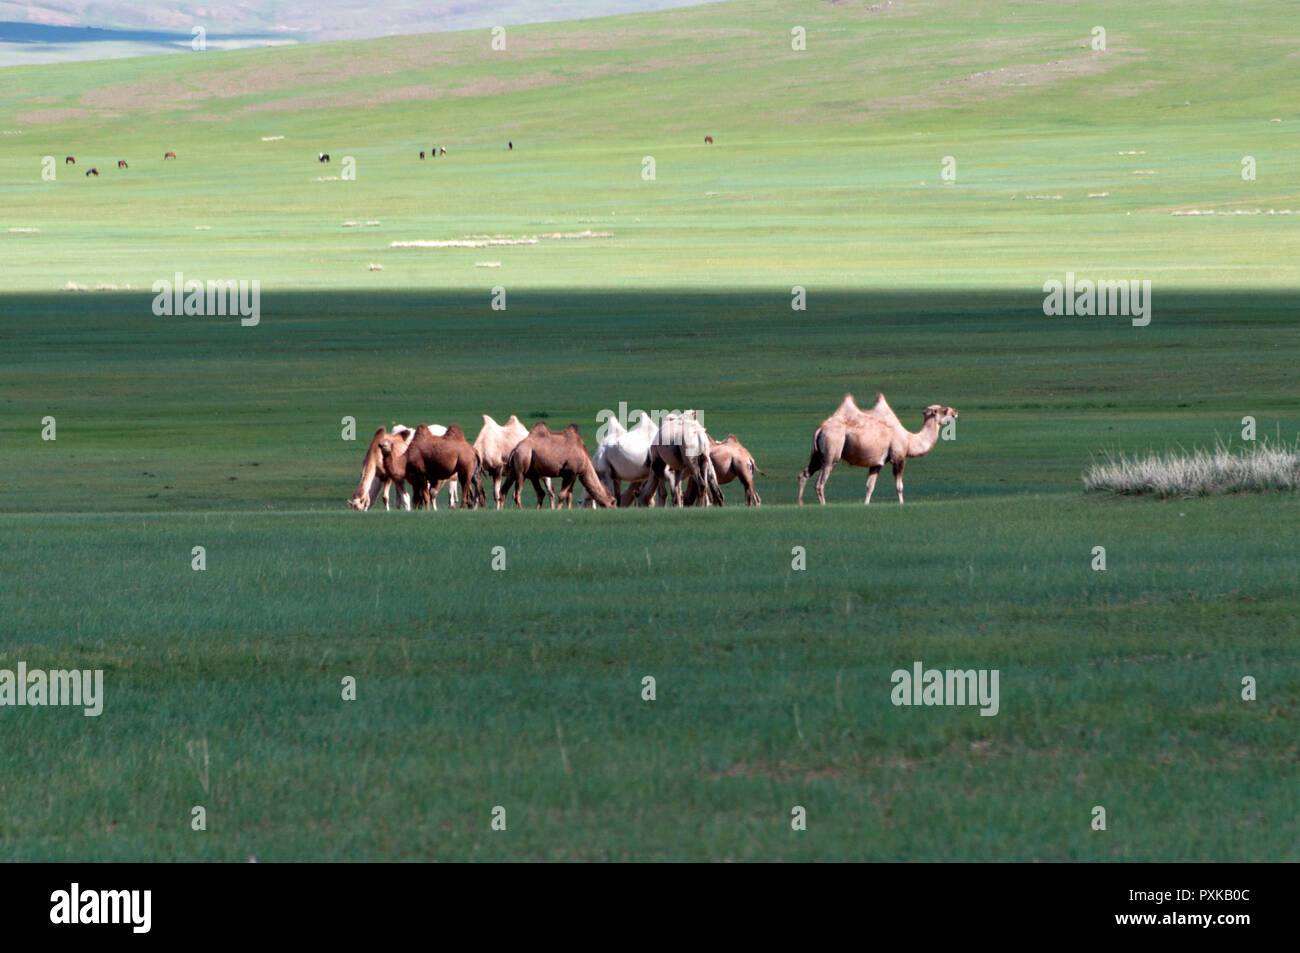 Camellos bactrianos de pastoreo en la estepa, Övörkhangai, Mongolia Foto de stock